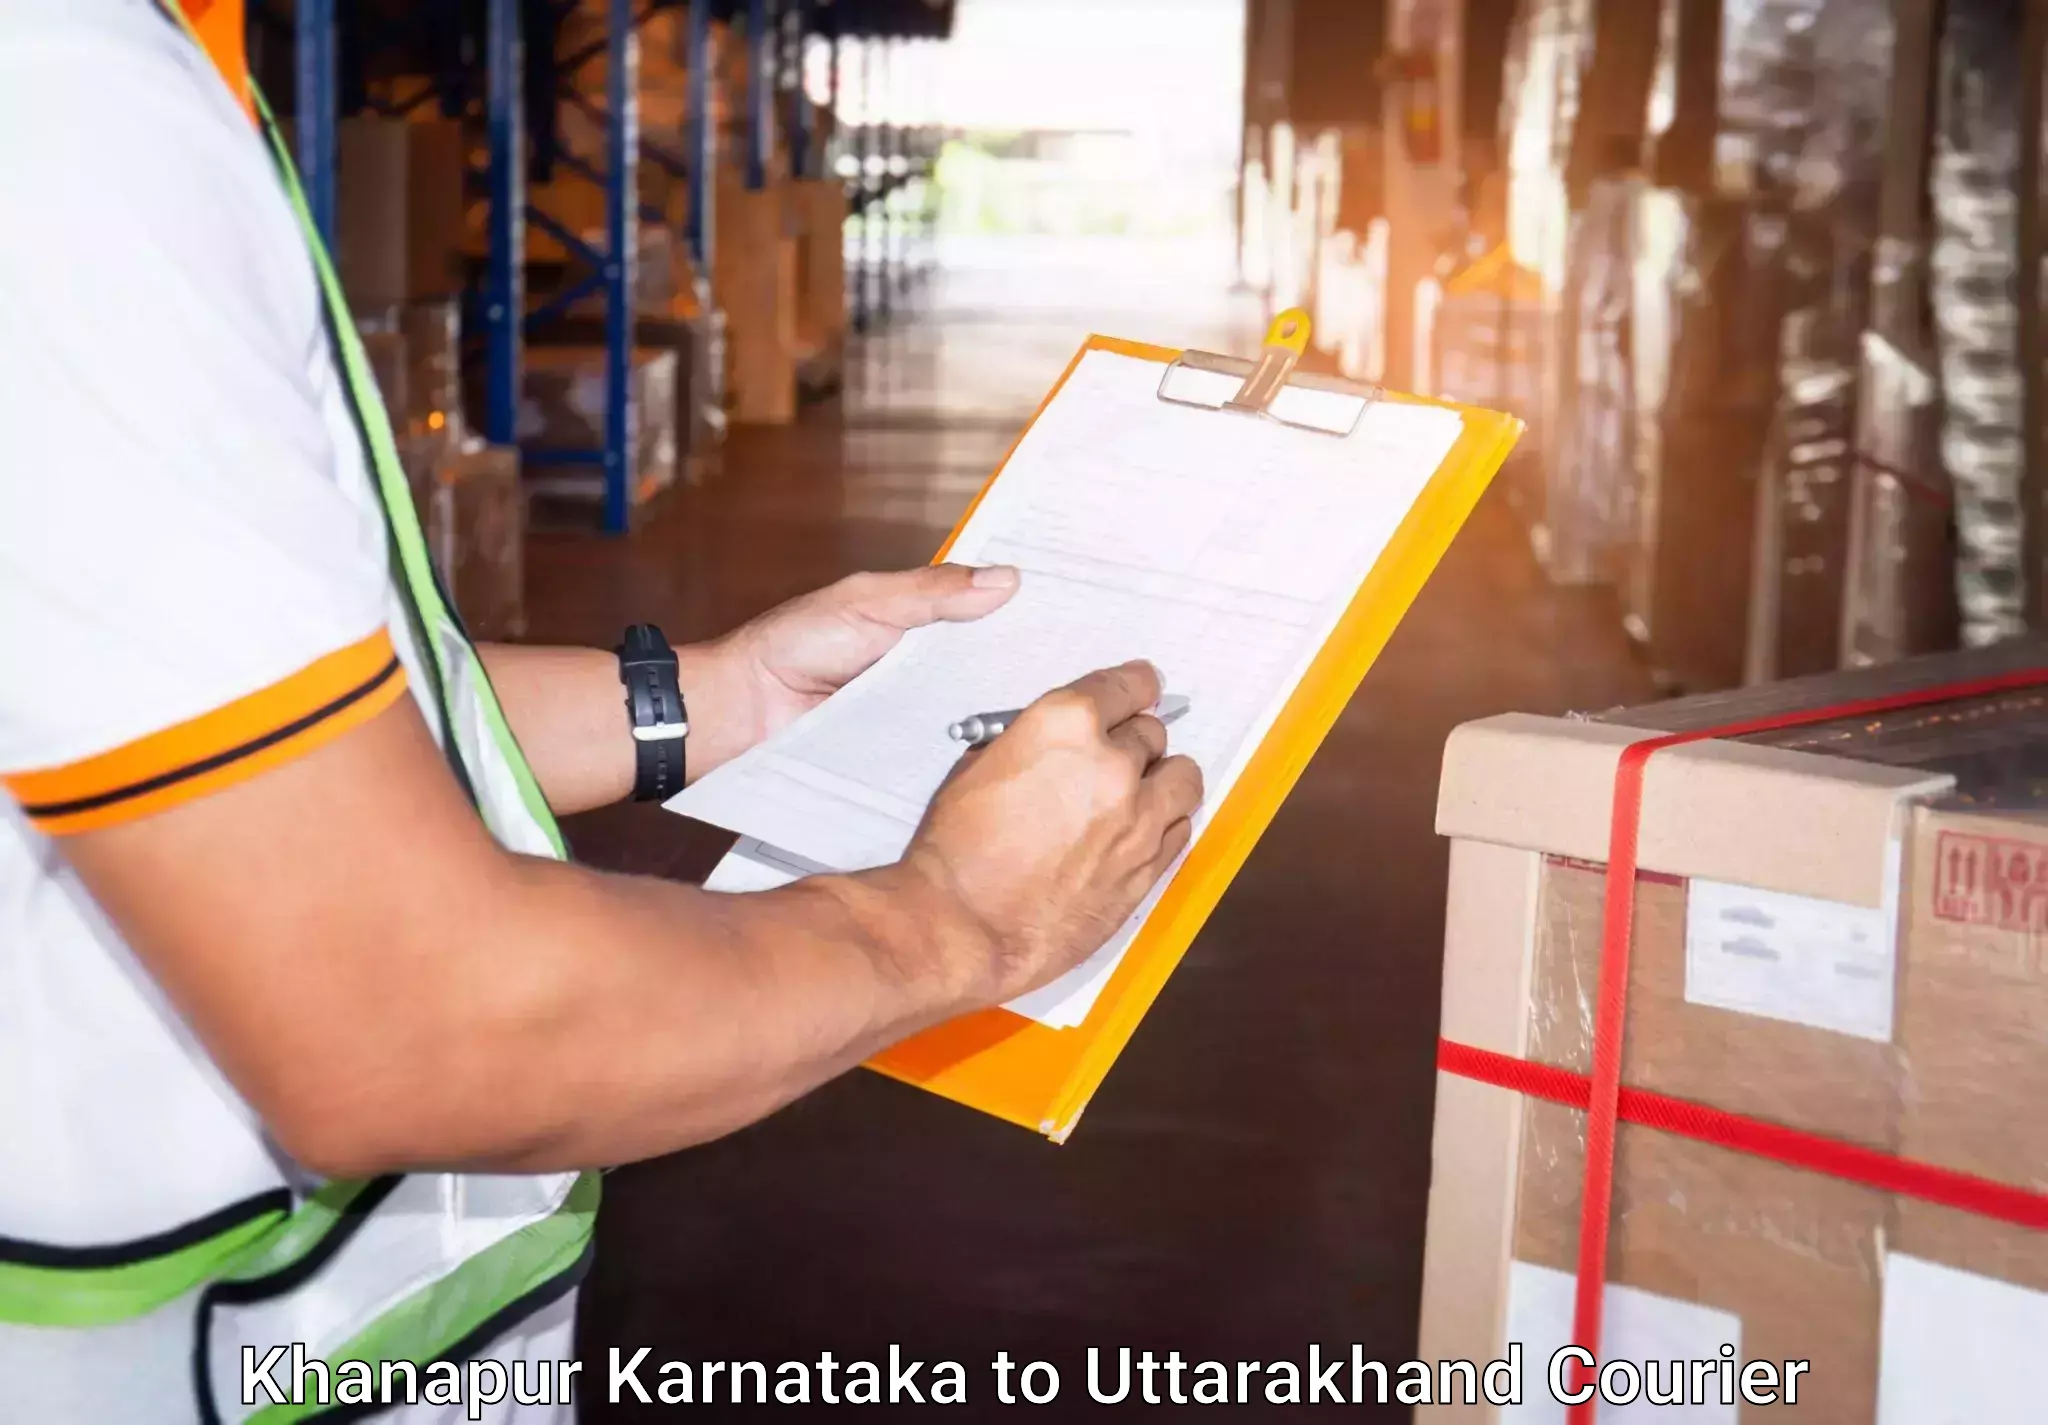 Luggage dispatch service Khanapur Karnataka to Pithoragarh